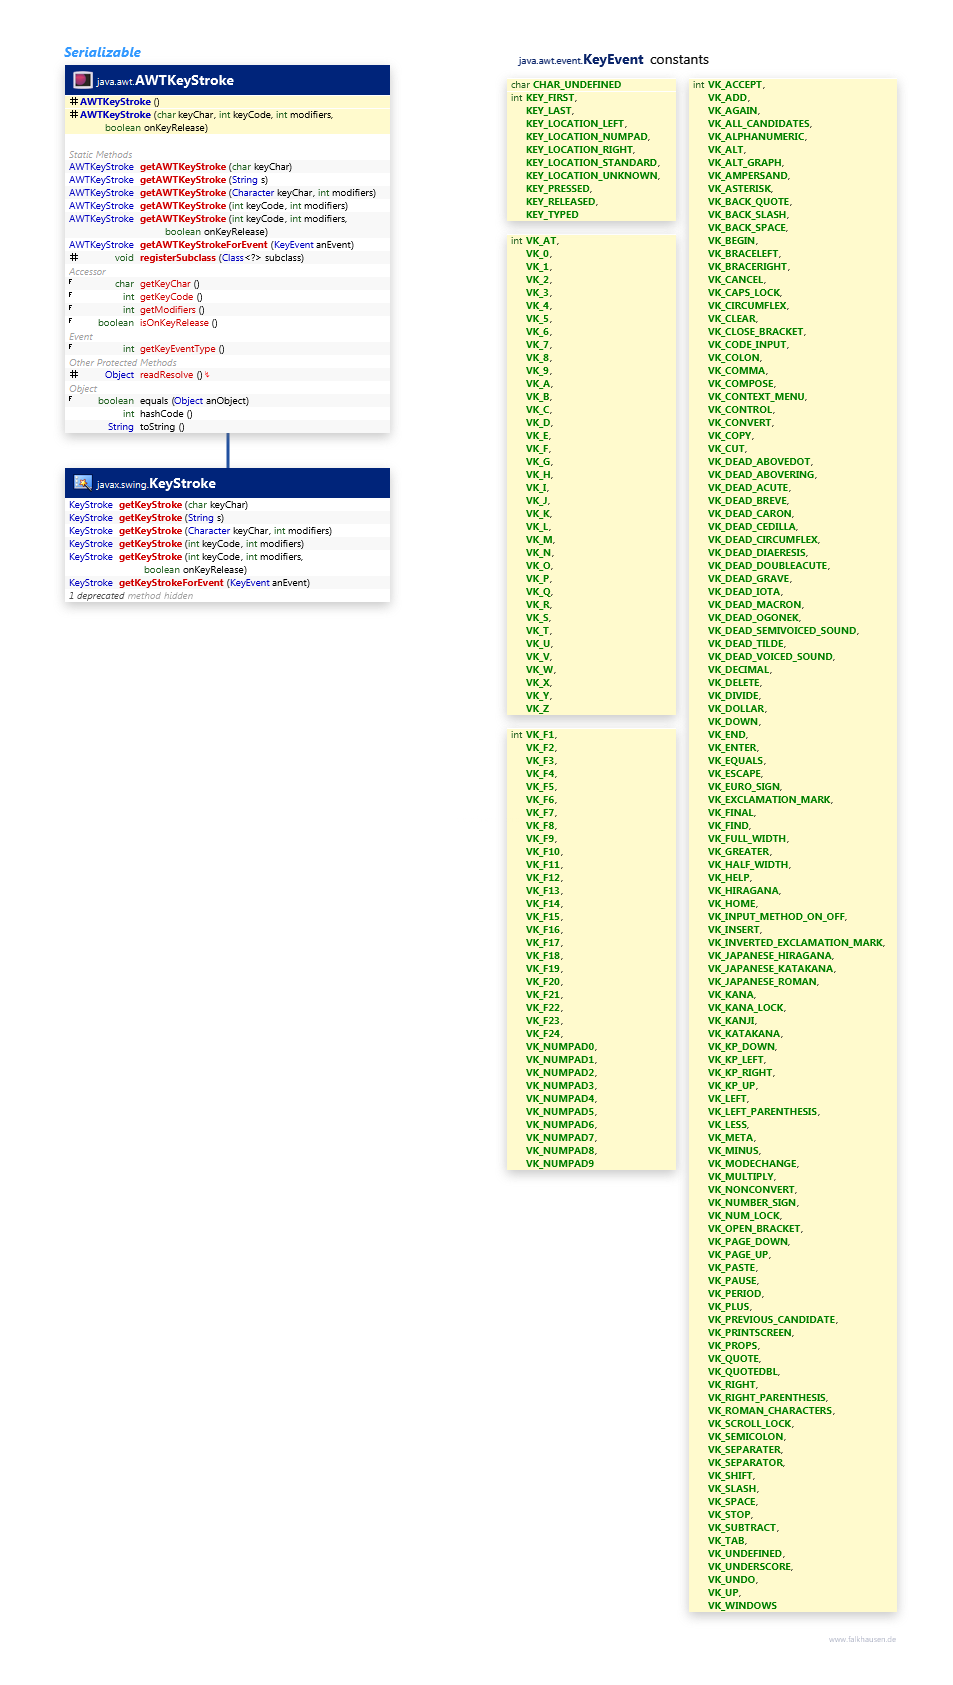 KeyStroke class diagram and api documentation for Java 7